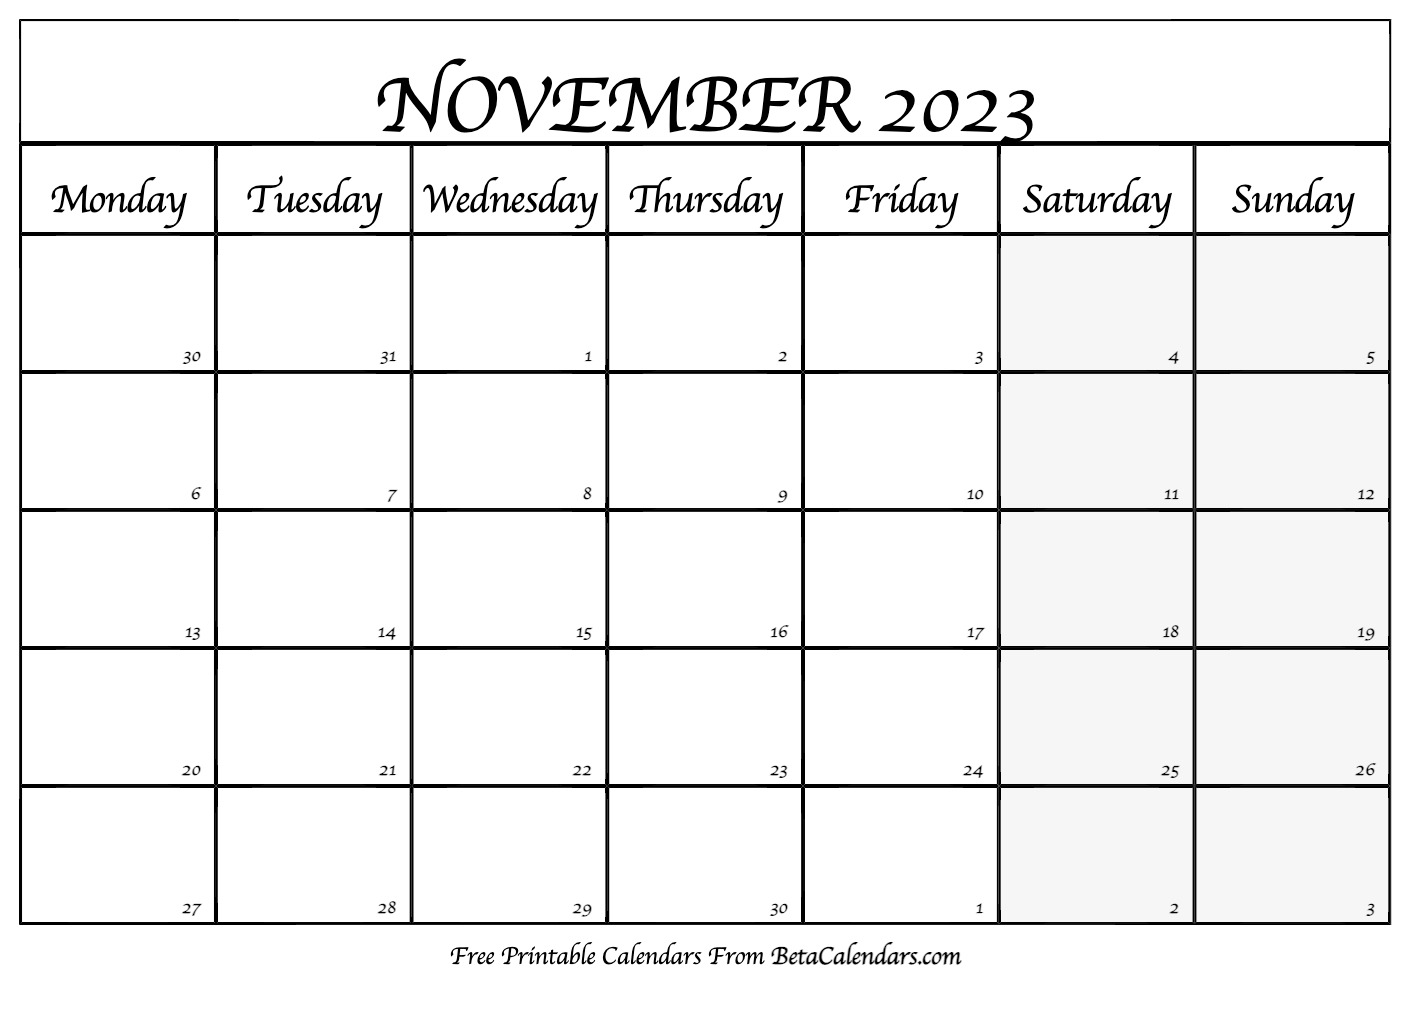 Blank November 2023 Calendar Template